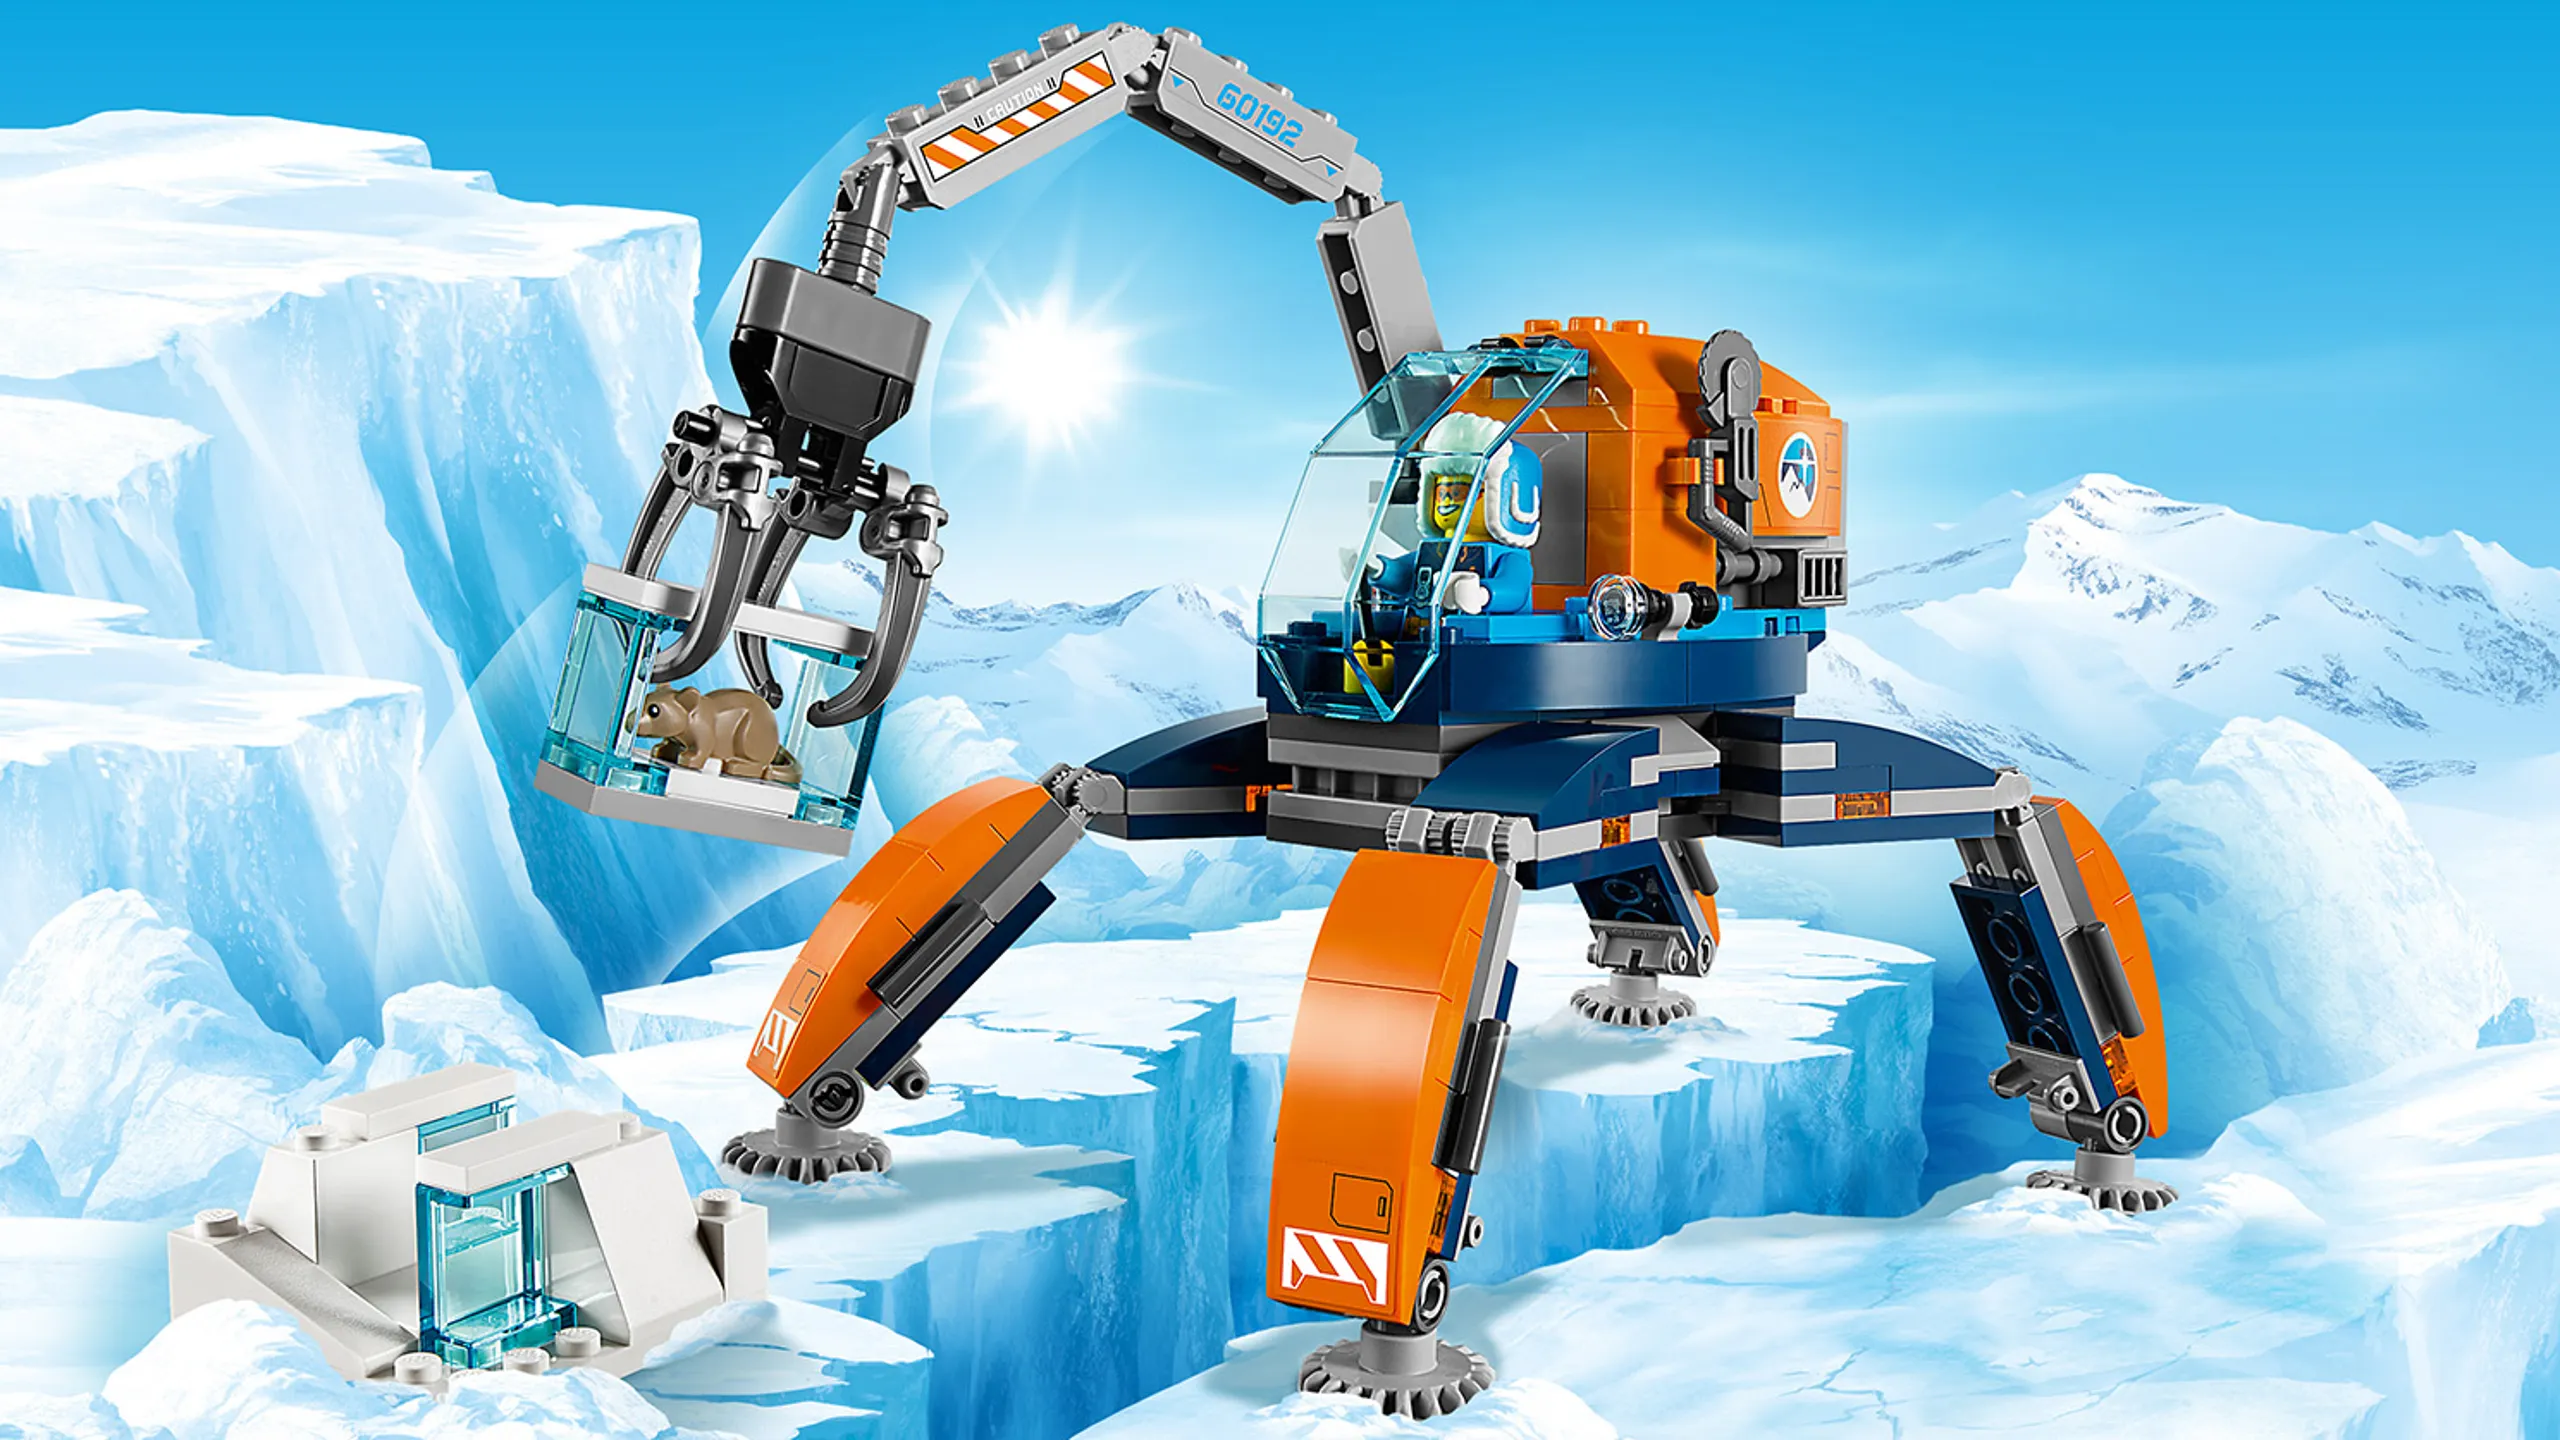 LEGO City Arctic Expedition - 60192 Ice Crawler - Lift big chunks of ice and snow with the crane of this orange ice crawler.